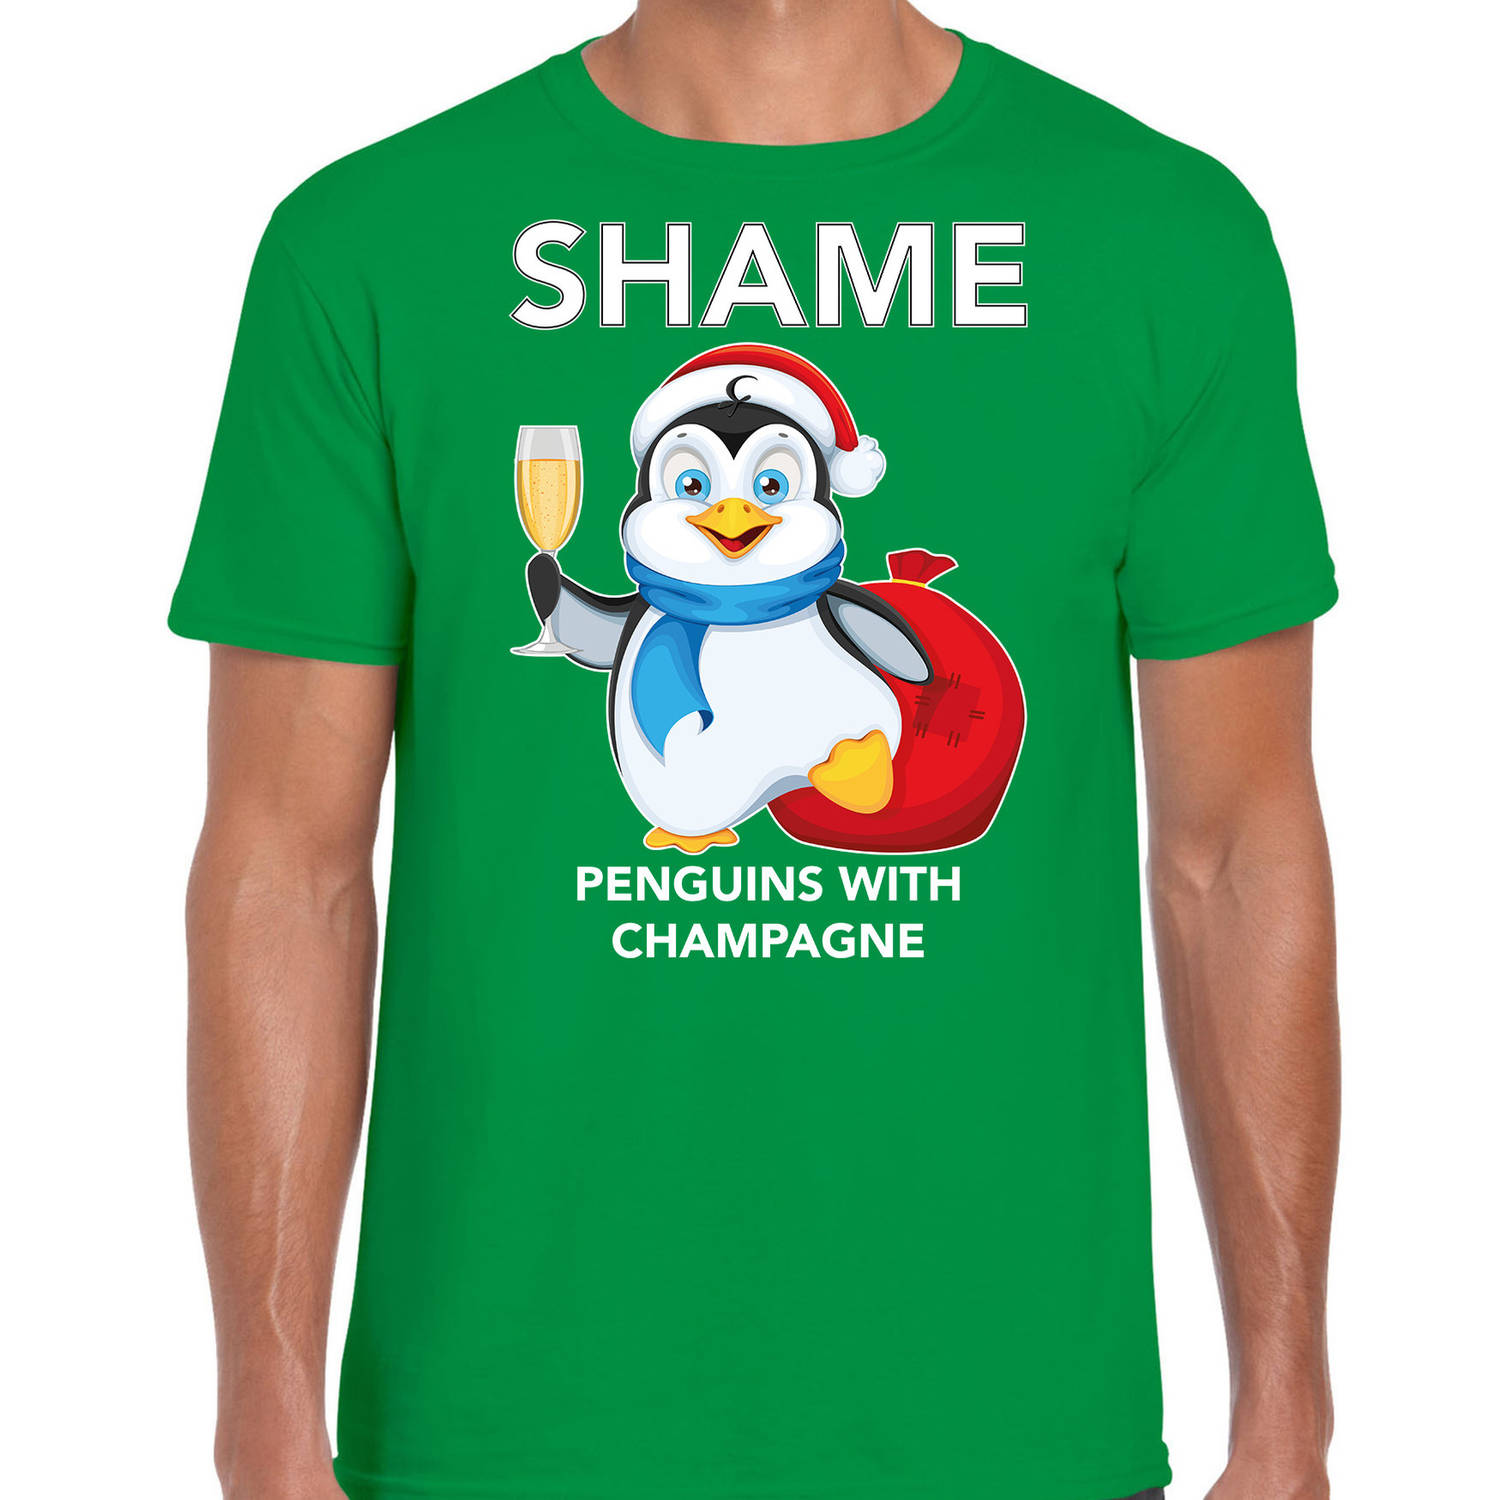 Groen Kerst shirt/ Kerstkleding met pinguin Shame penguins with champagne voor heren M - kerst t-shirts